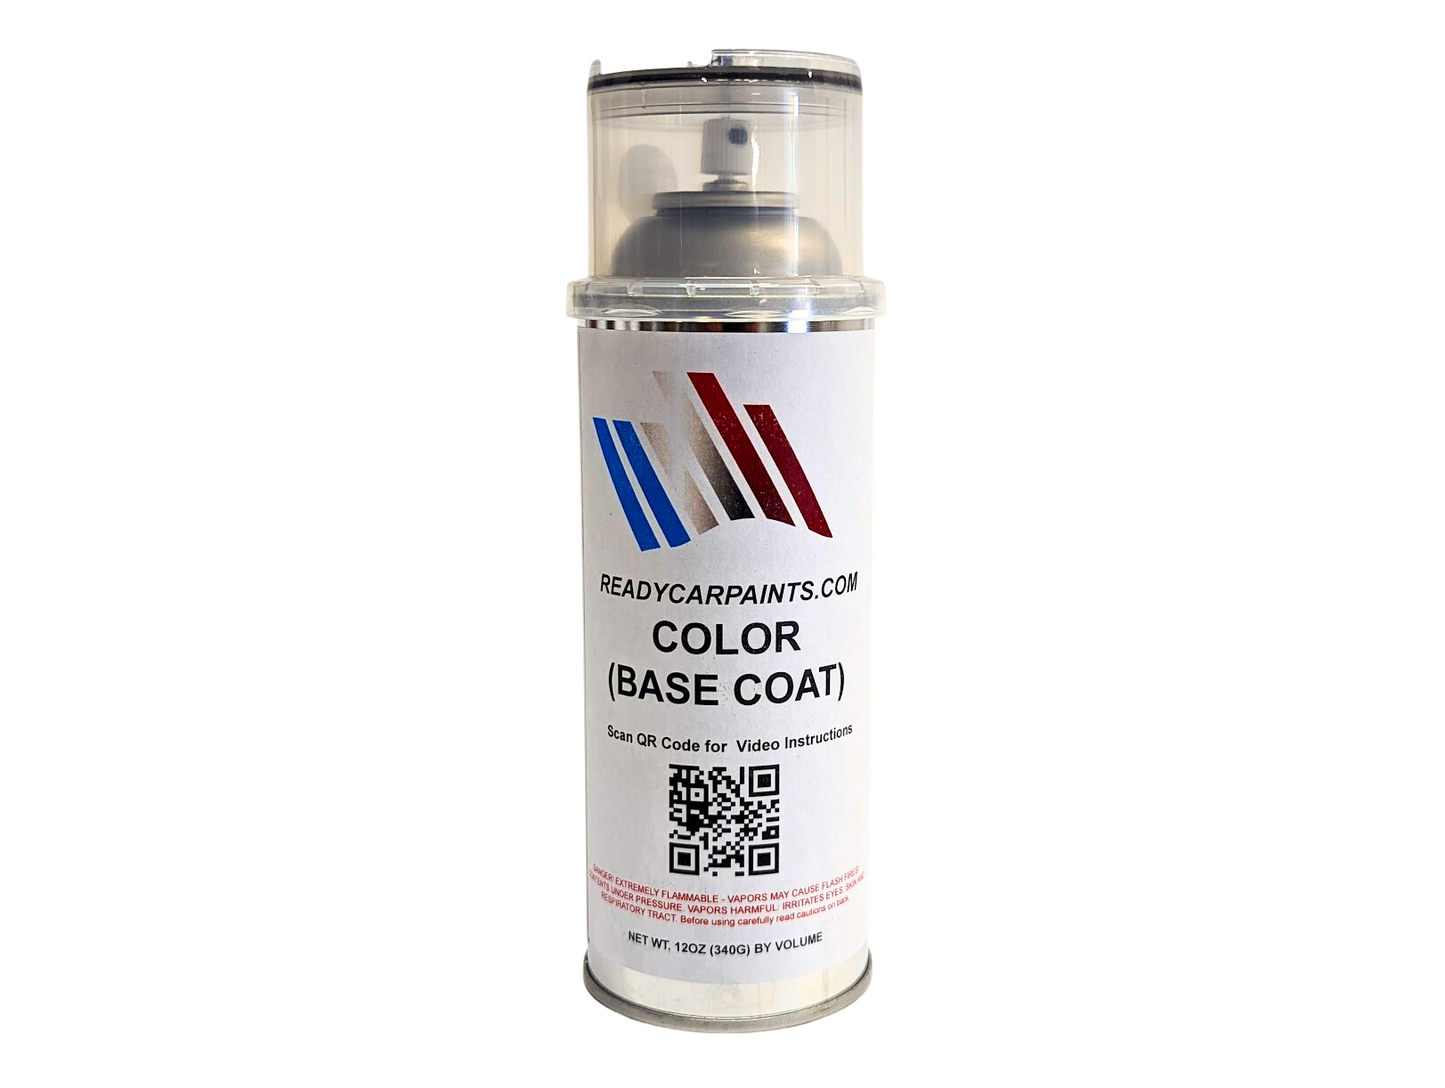 MASERATI 226686/264627 Grigio Nuvolari Metallic Automotive Spray Paint 100% OEM Color Match